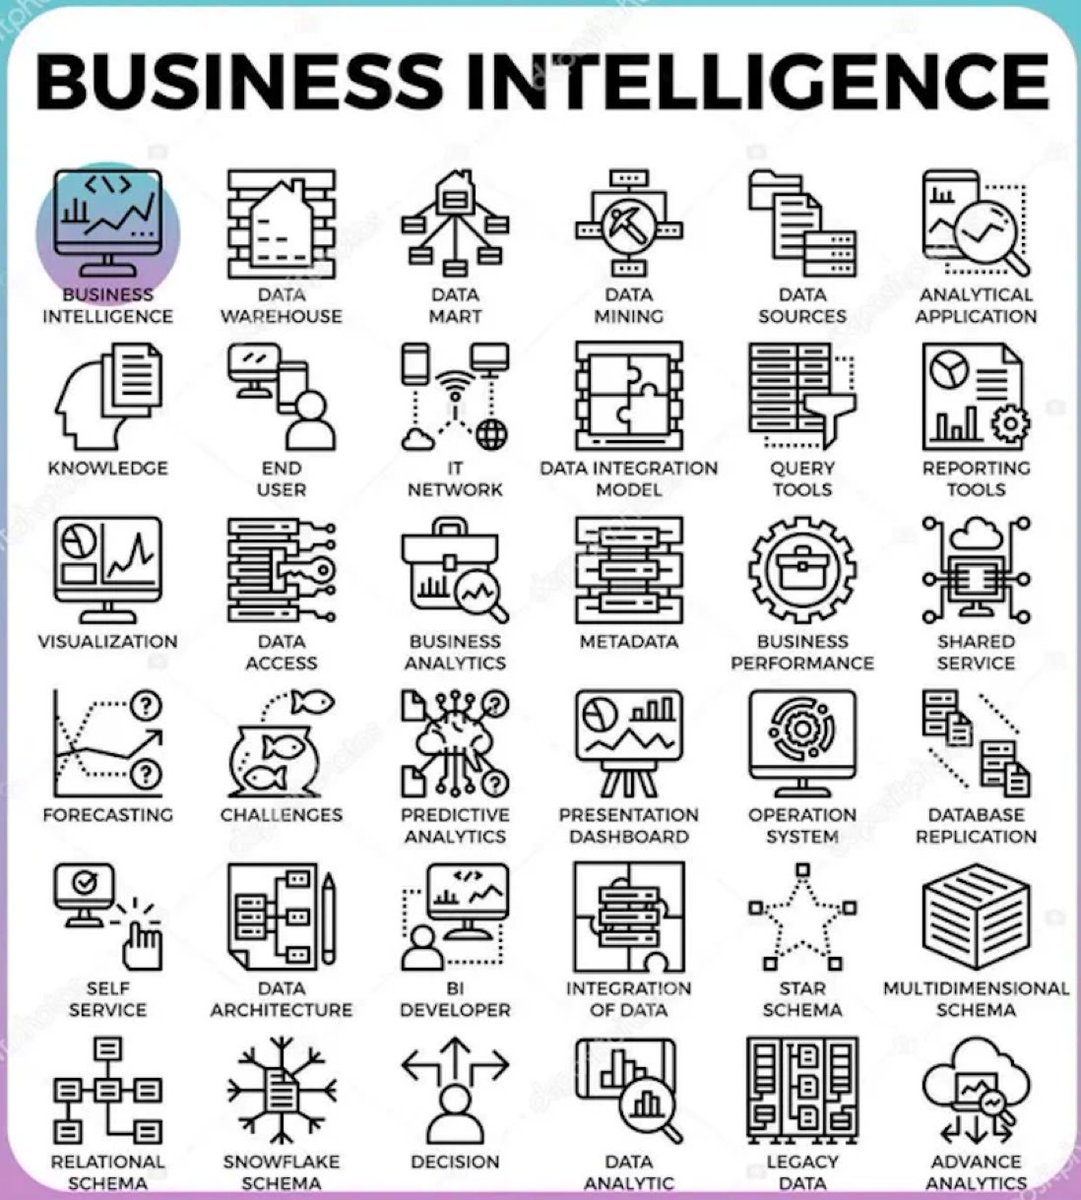 36 shades of #BusinessIntelligence 

RT @DataScienceDojo @KirkDBorne 
#infographic 

#BI #MachineLearning #AI #BigData #Analytics #DataAnalytics #DataScience #DecisionScience